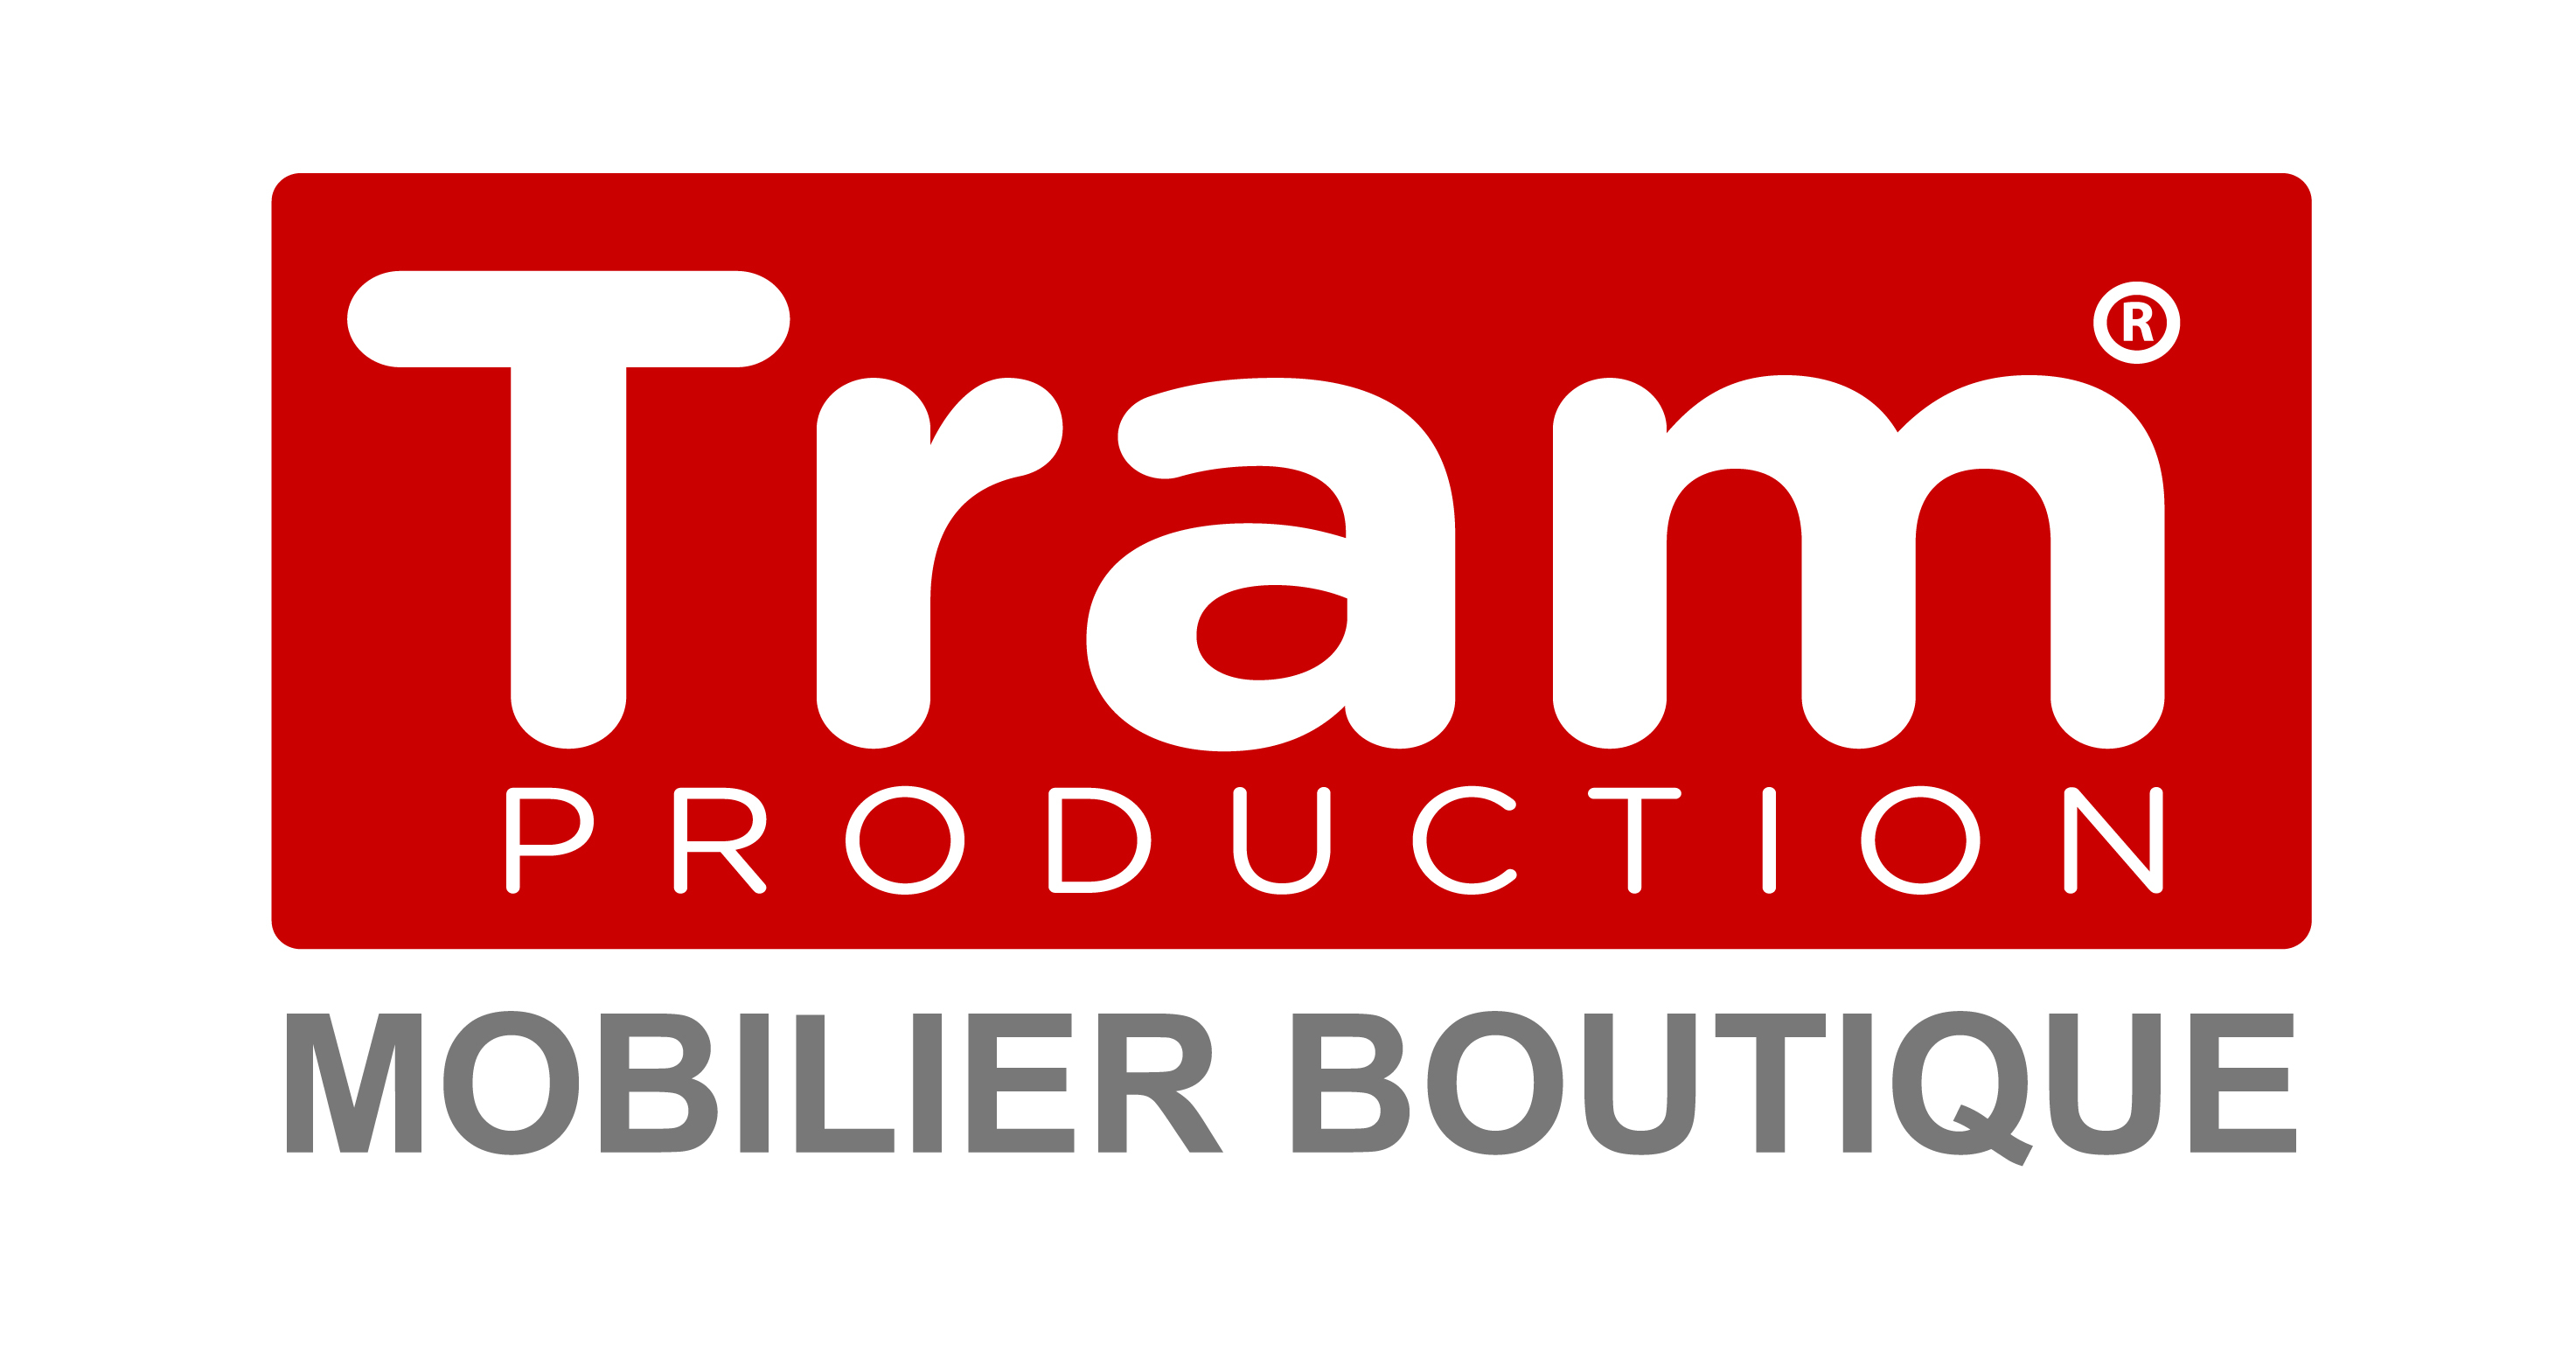 TRAM PRODUCTION